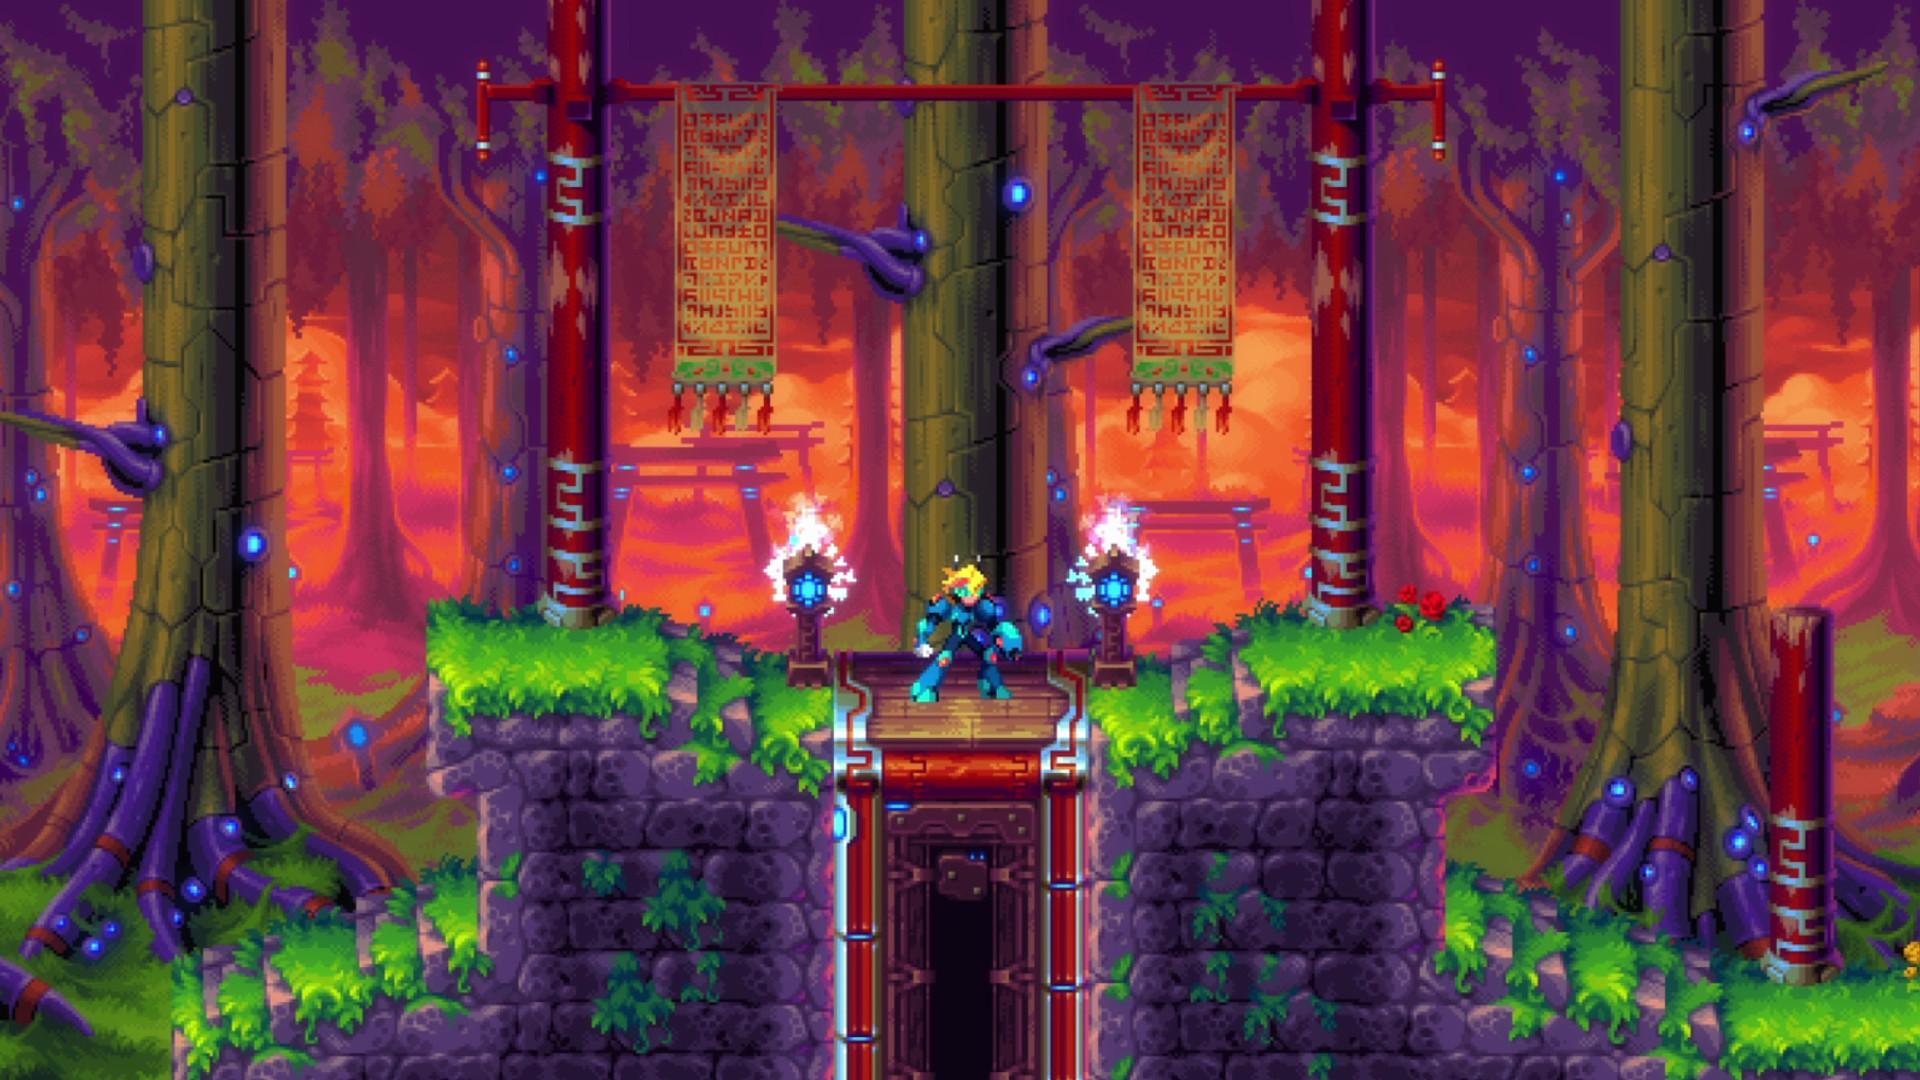 Screenshot №3 from game 30XX